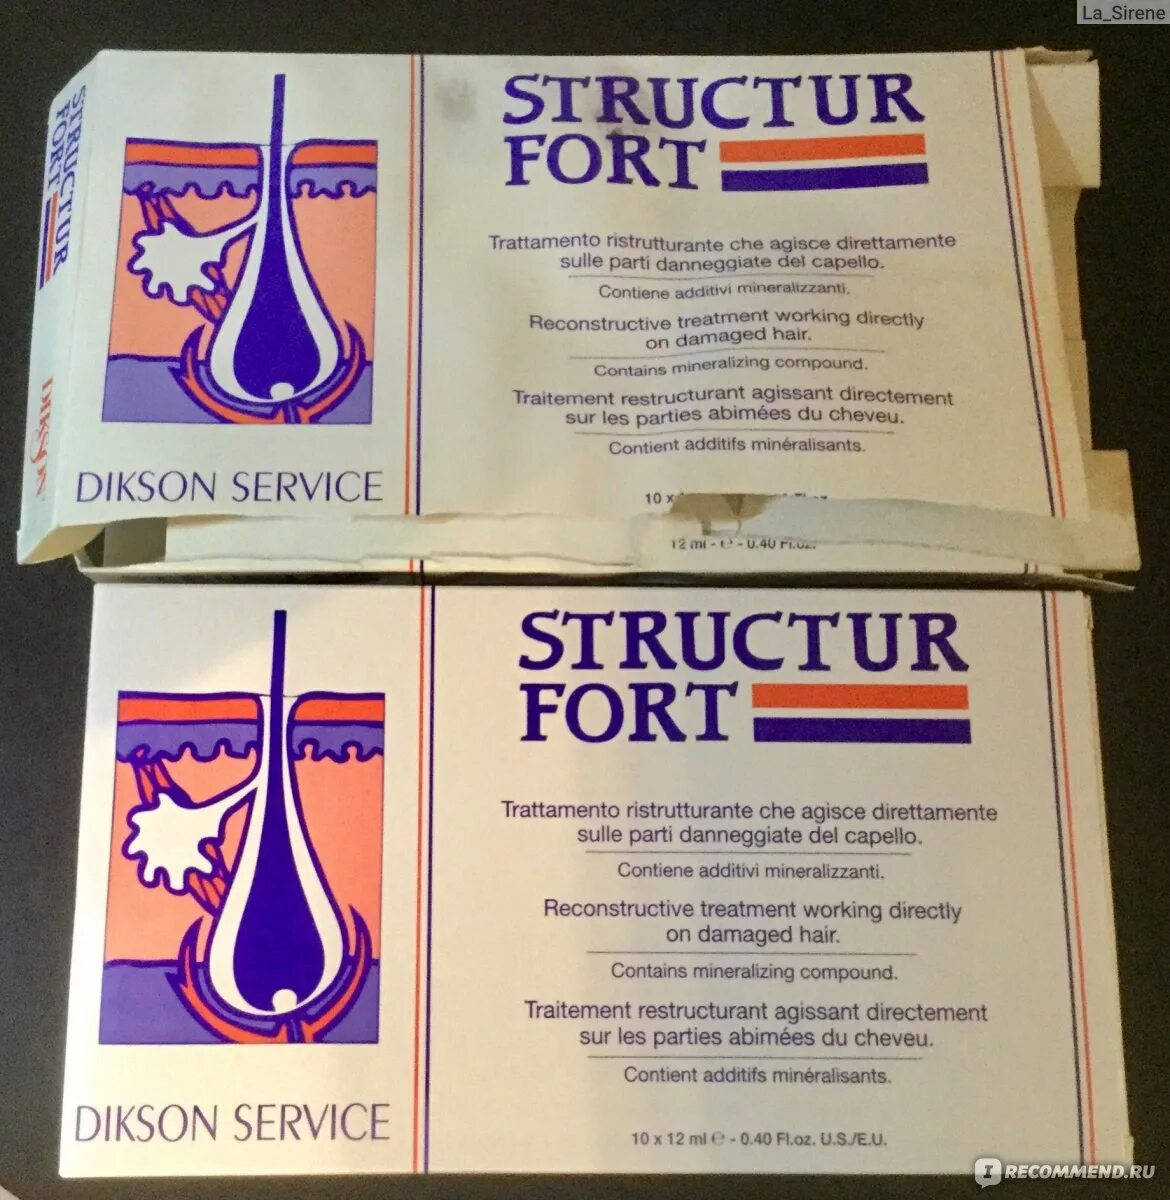 Structur fort. Ампулы structur Fort. Dikson structur Fort. Structur Fort ампулы для волос. Структура форте ампулы.